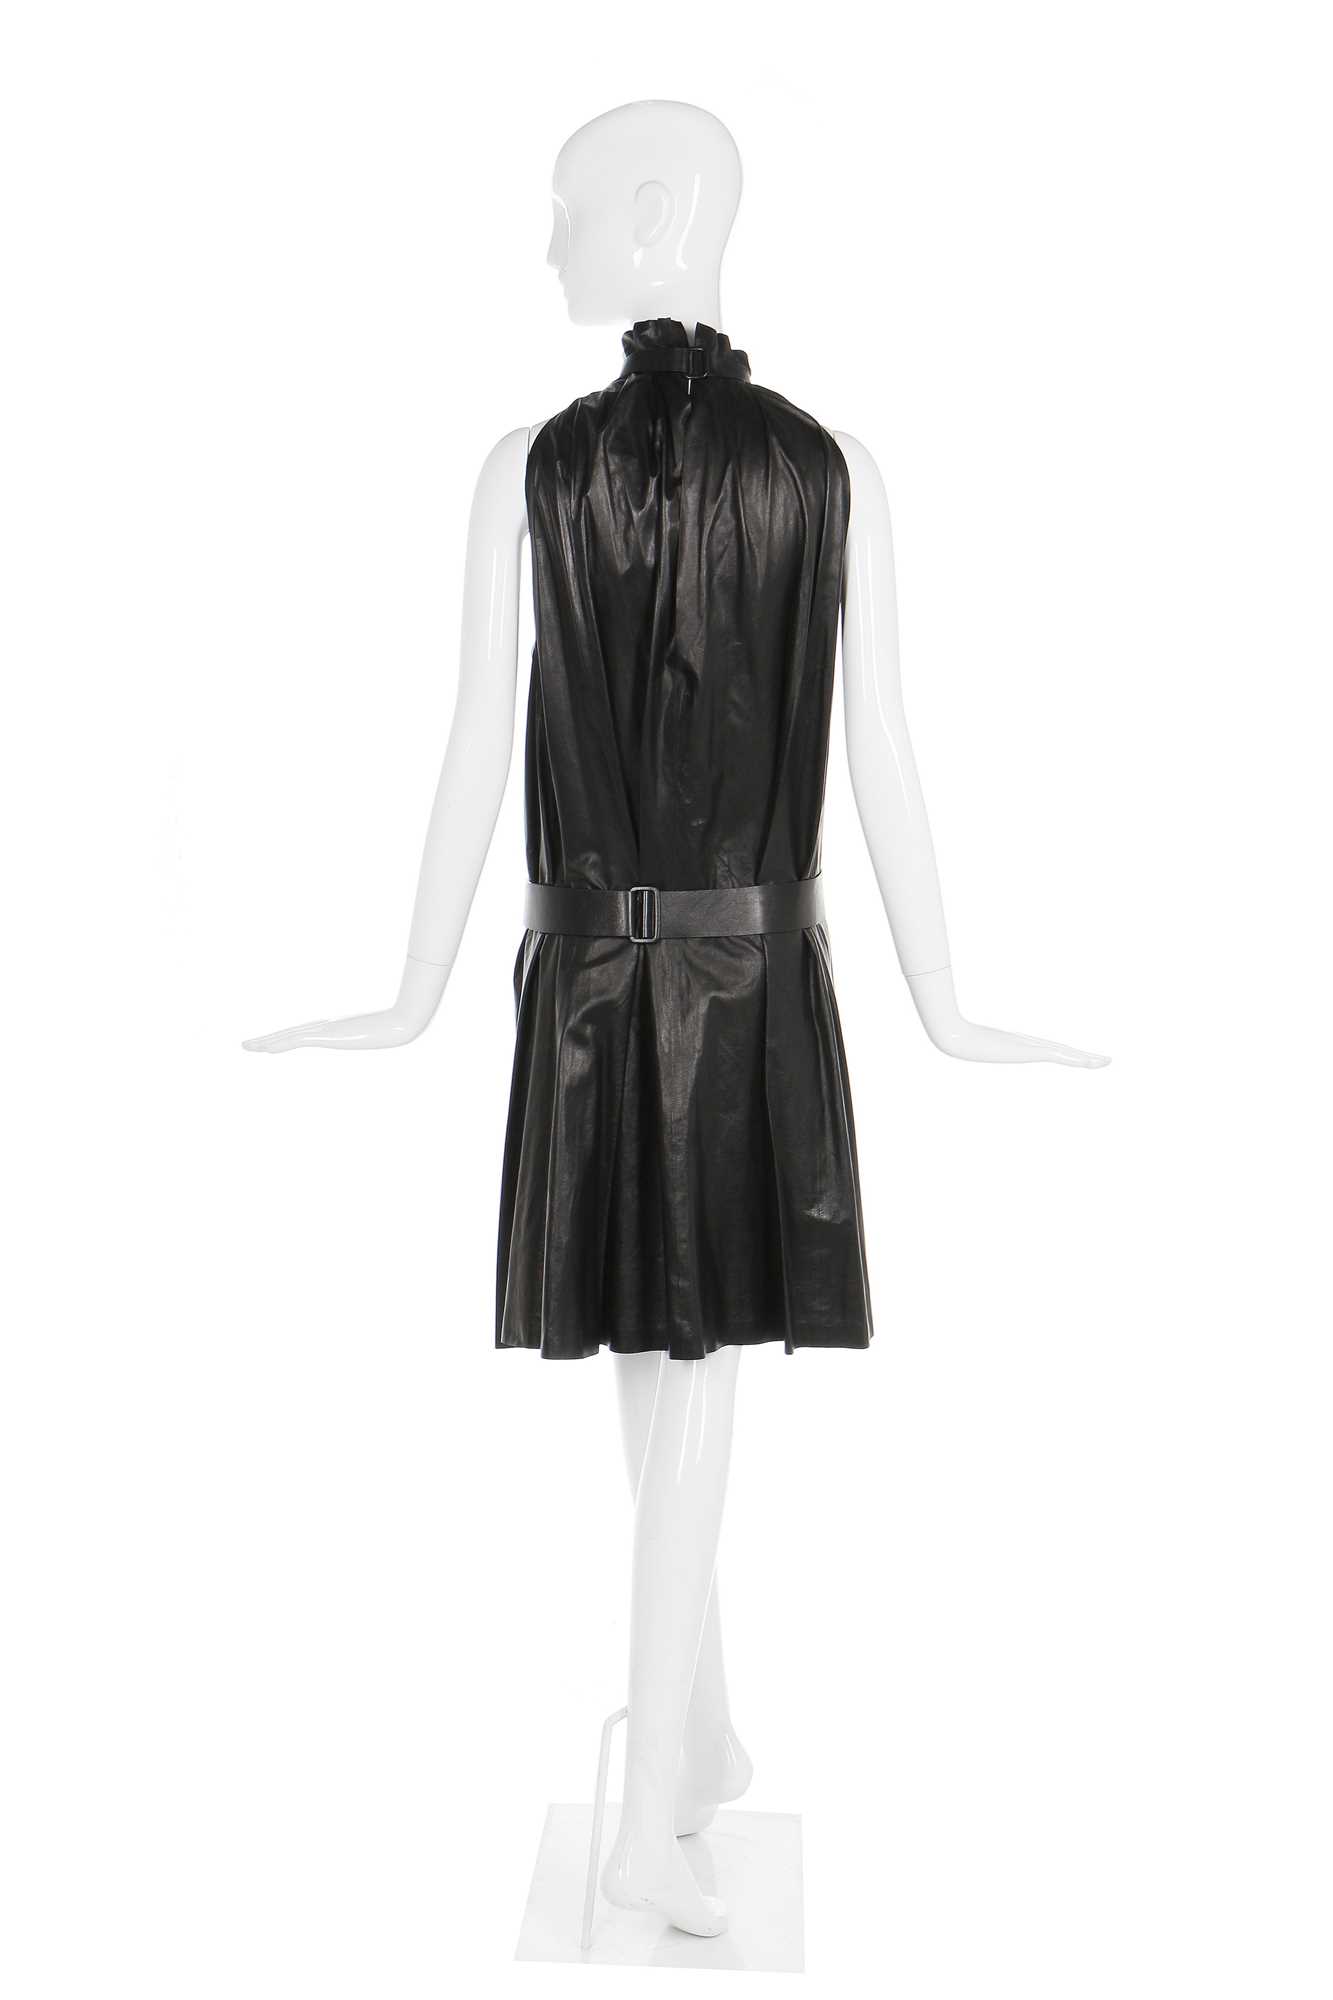 Lot 24 - Alexander McQueen soft black kid leather dress, 'Irere', Spring-Summer 2003